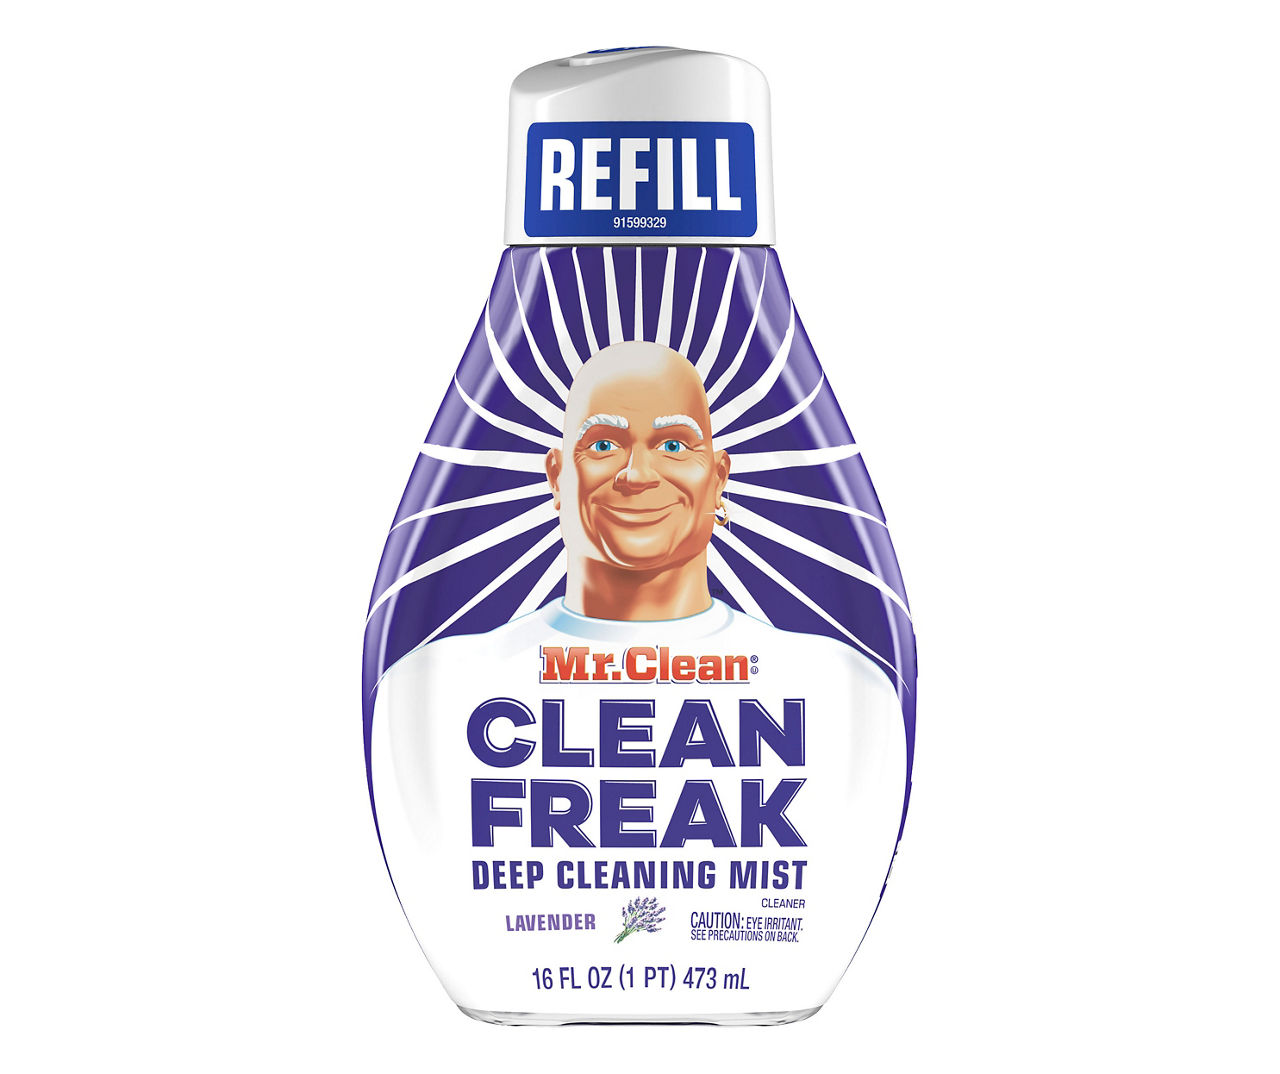 Mr. Clean Freak Deep Cleaning Mist Refill, Lemon  